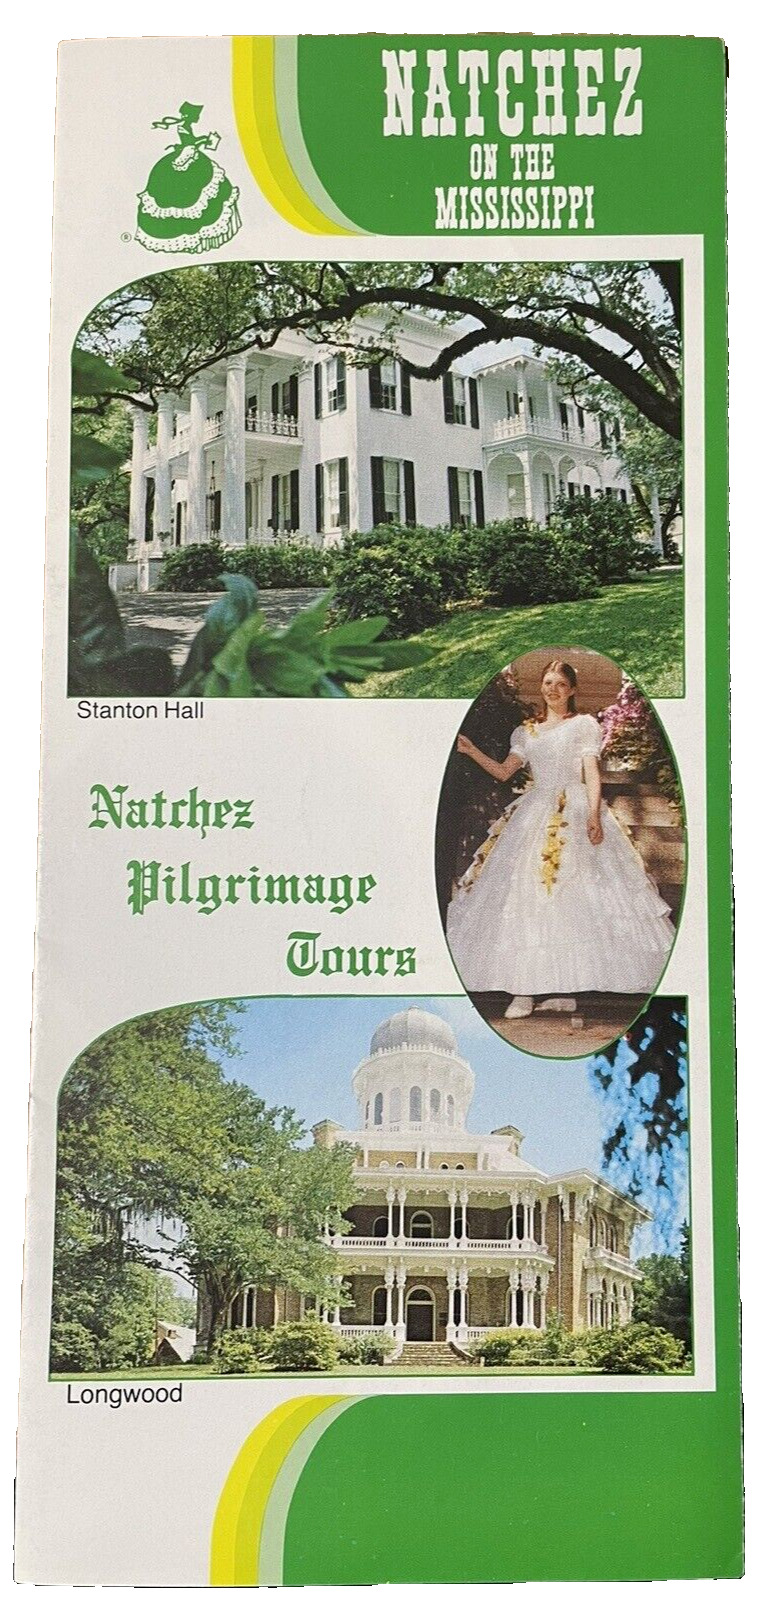 Natchez on the Mississippi Brochure Pilgrimage Tours Antebellum Longwood Stanton